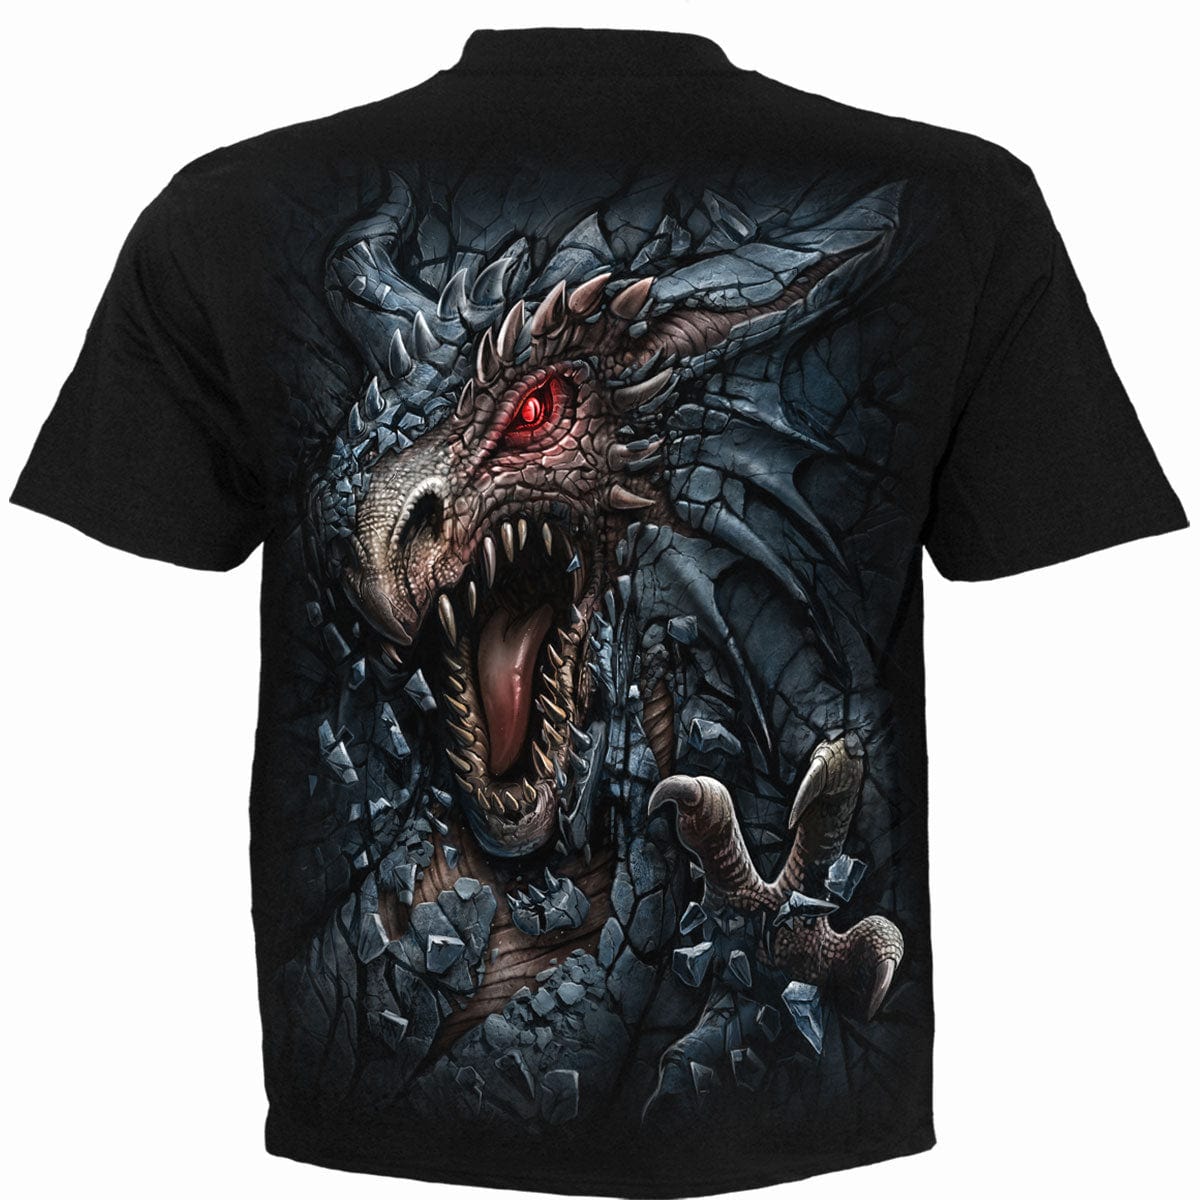 DRAGON'S LAIR - Kids T-Shirt Black - Spiral USA